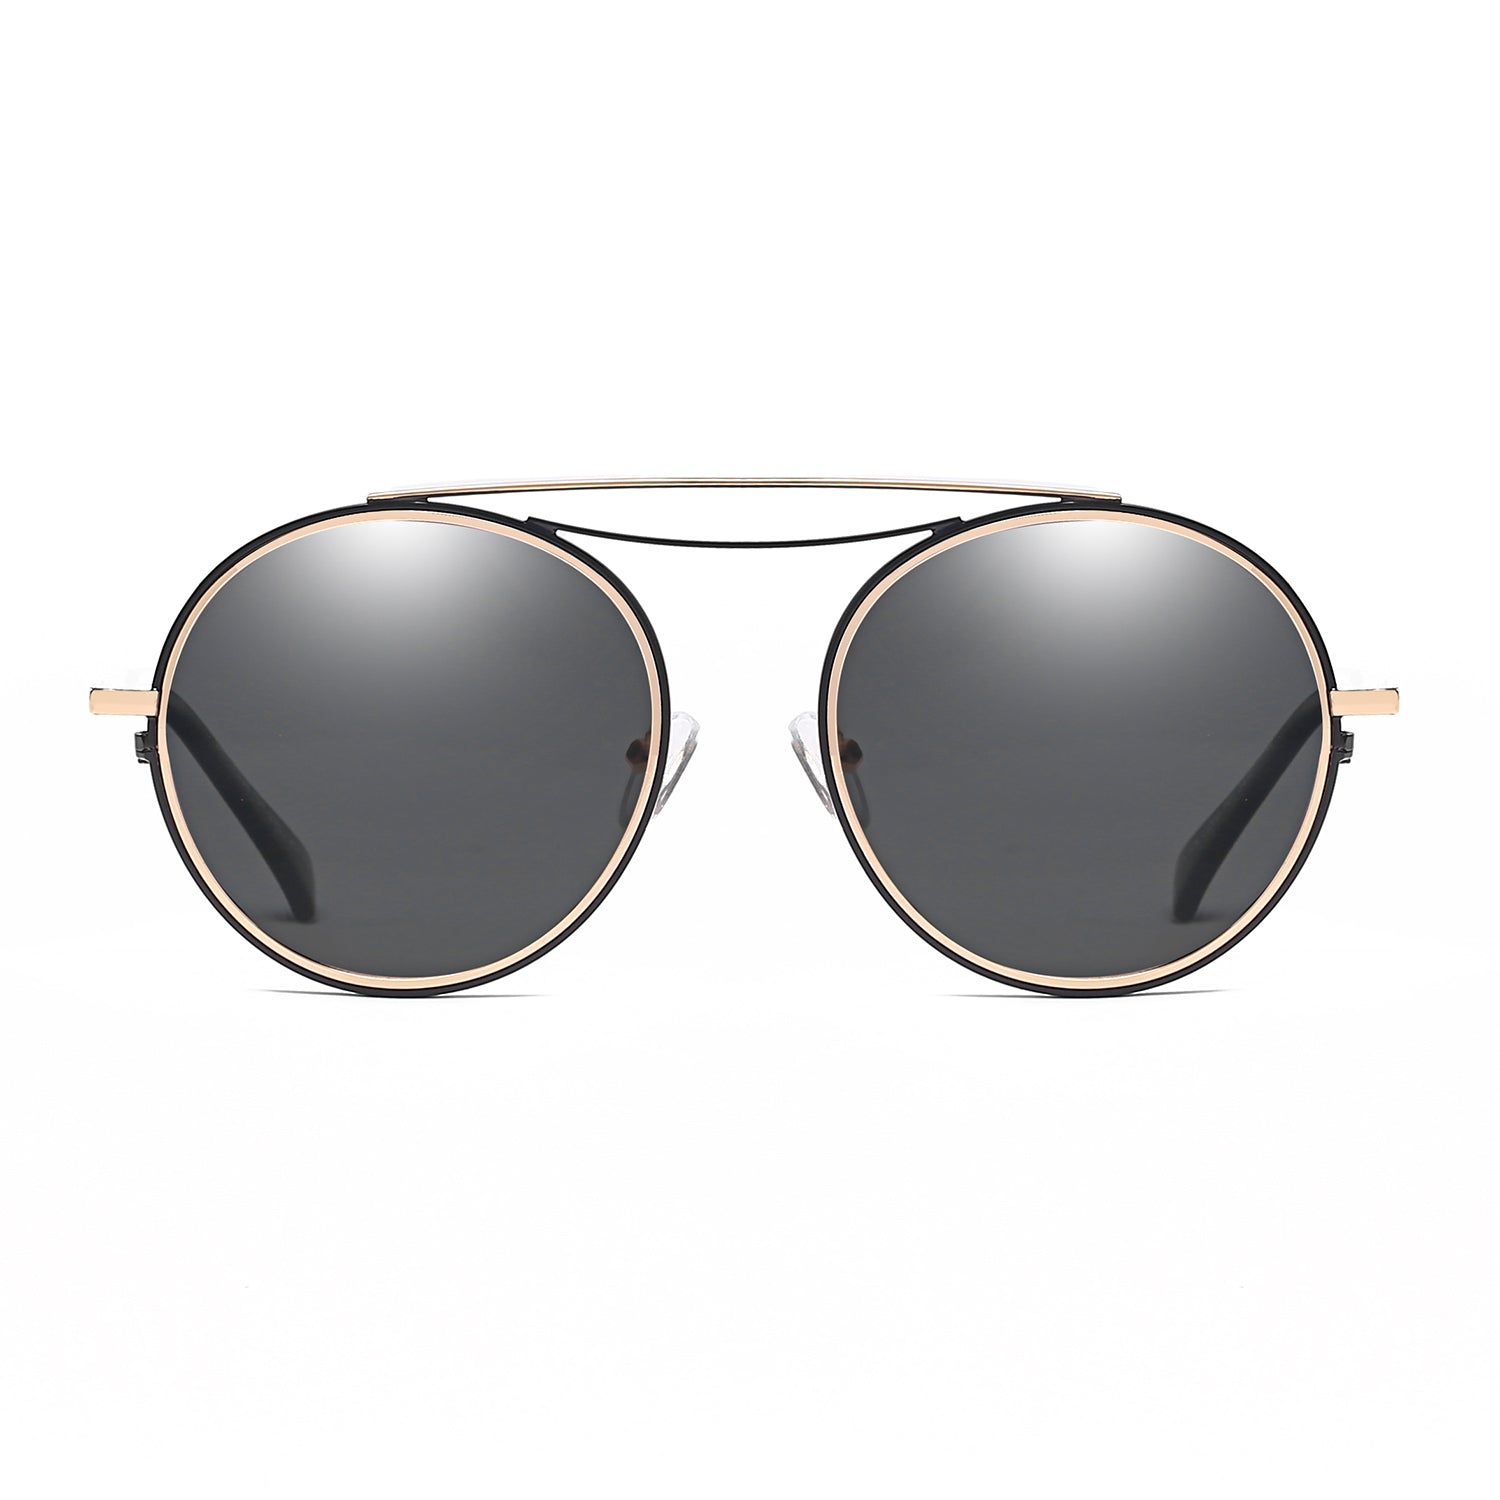 Fairfax | Polarized Circle Round Brow-Bar Fashion Sunglasses Silver - Icy Blue